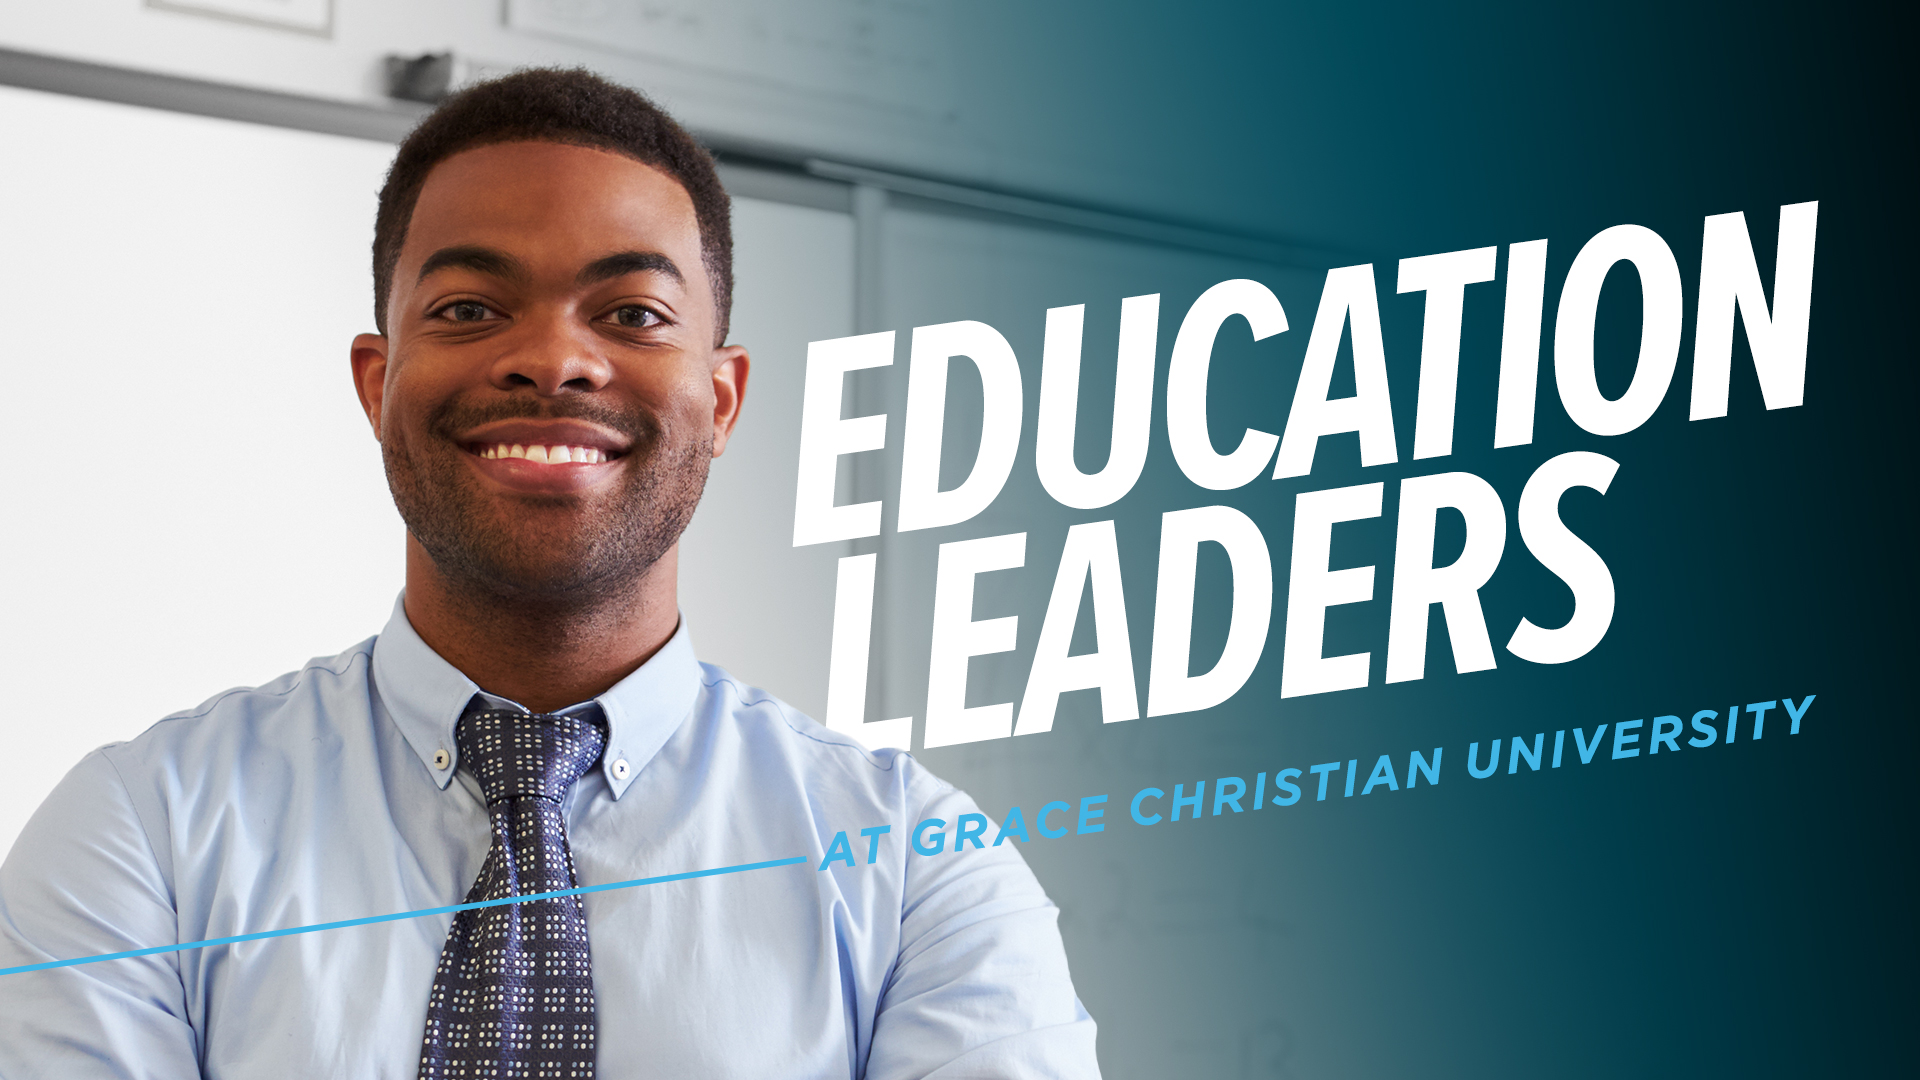 Education Leaders at Grace Christian University